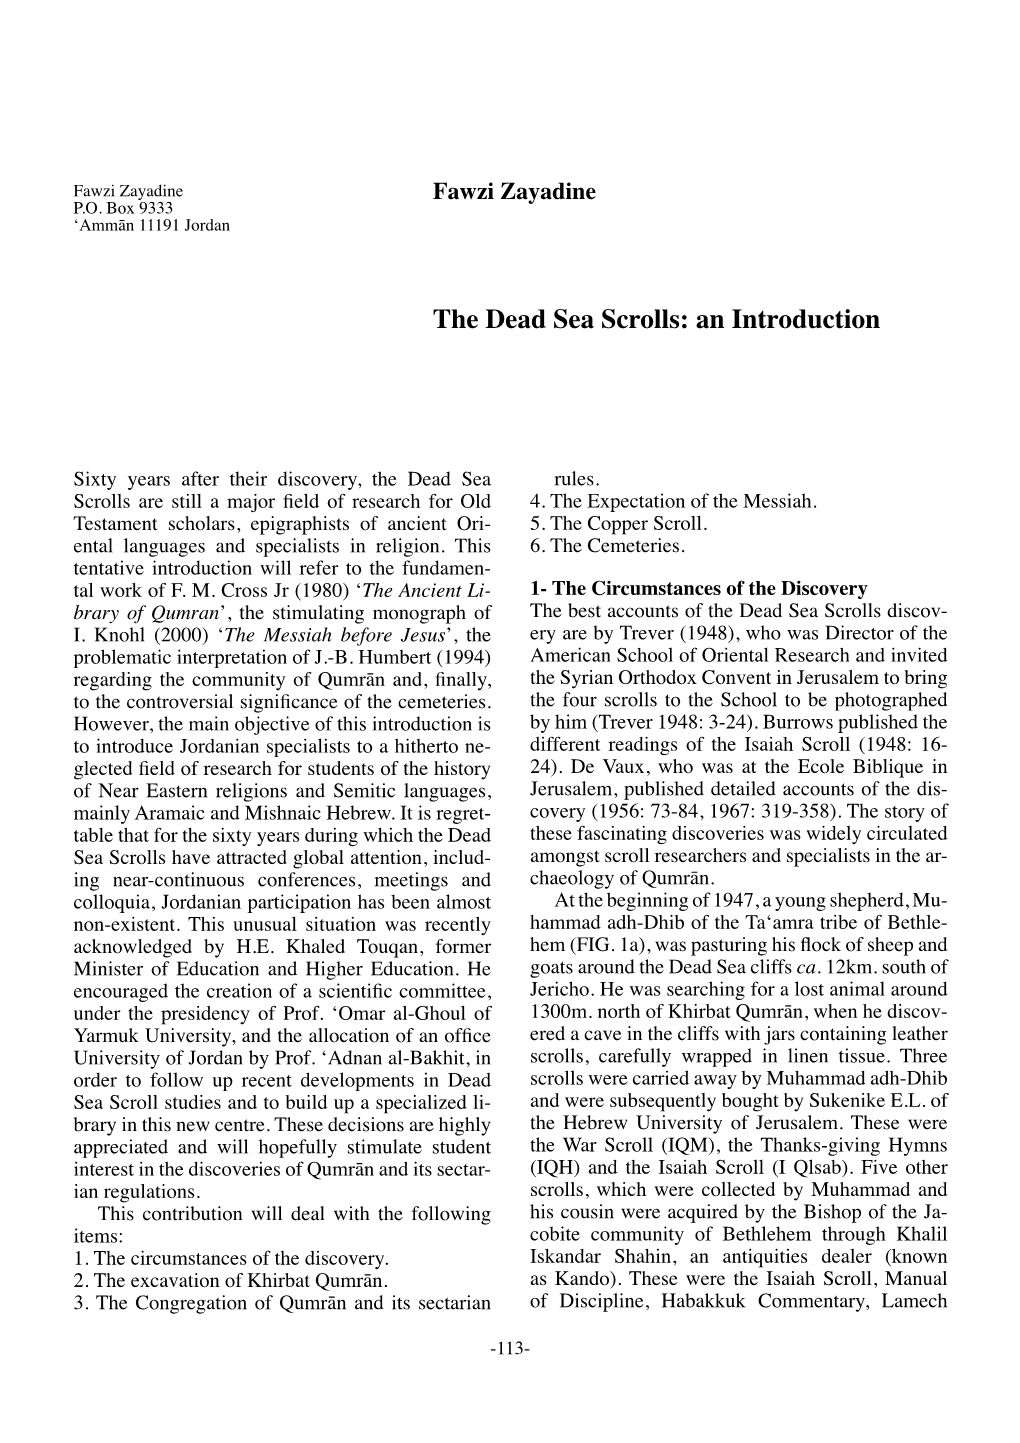 The Dead Sea Scrolls: an Introduction